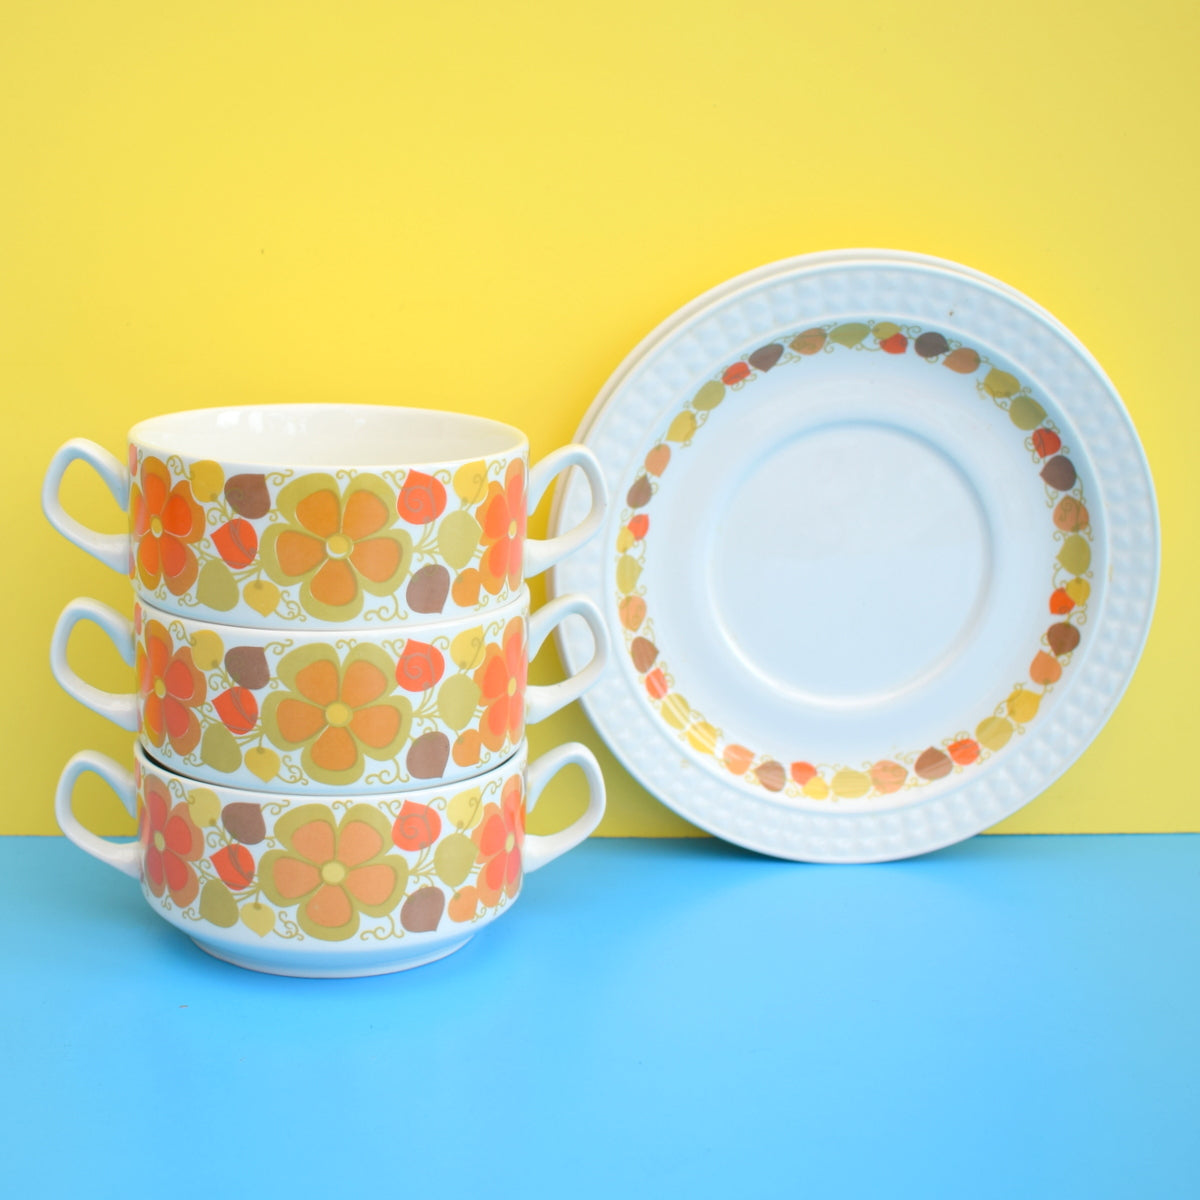 Vintage 1960s Pontesa Fantasia Ceramic Soup Bowls / Plates - Spanish - Flower Power - Orange